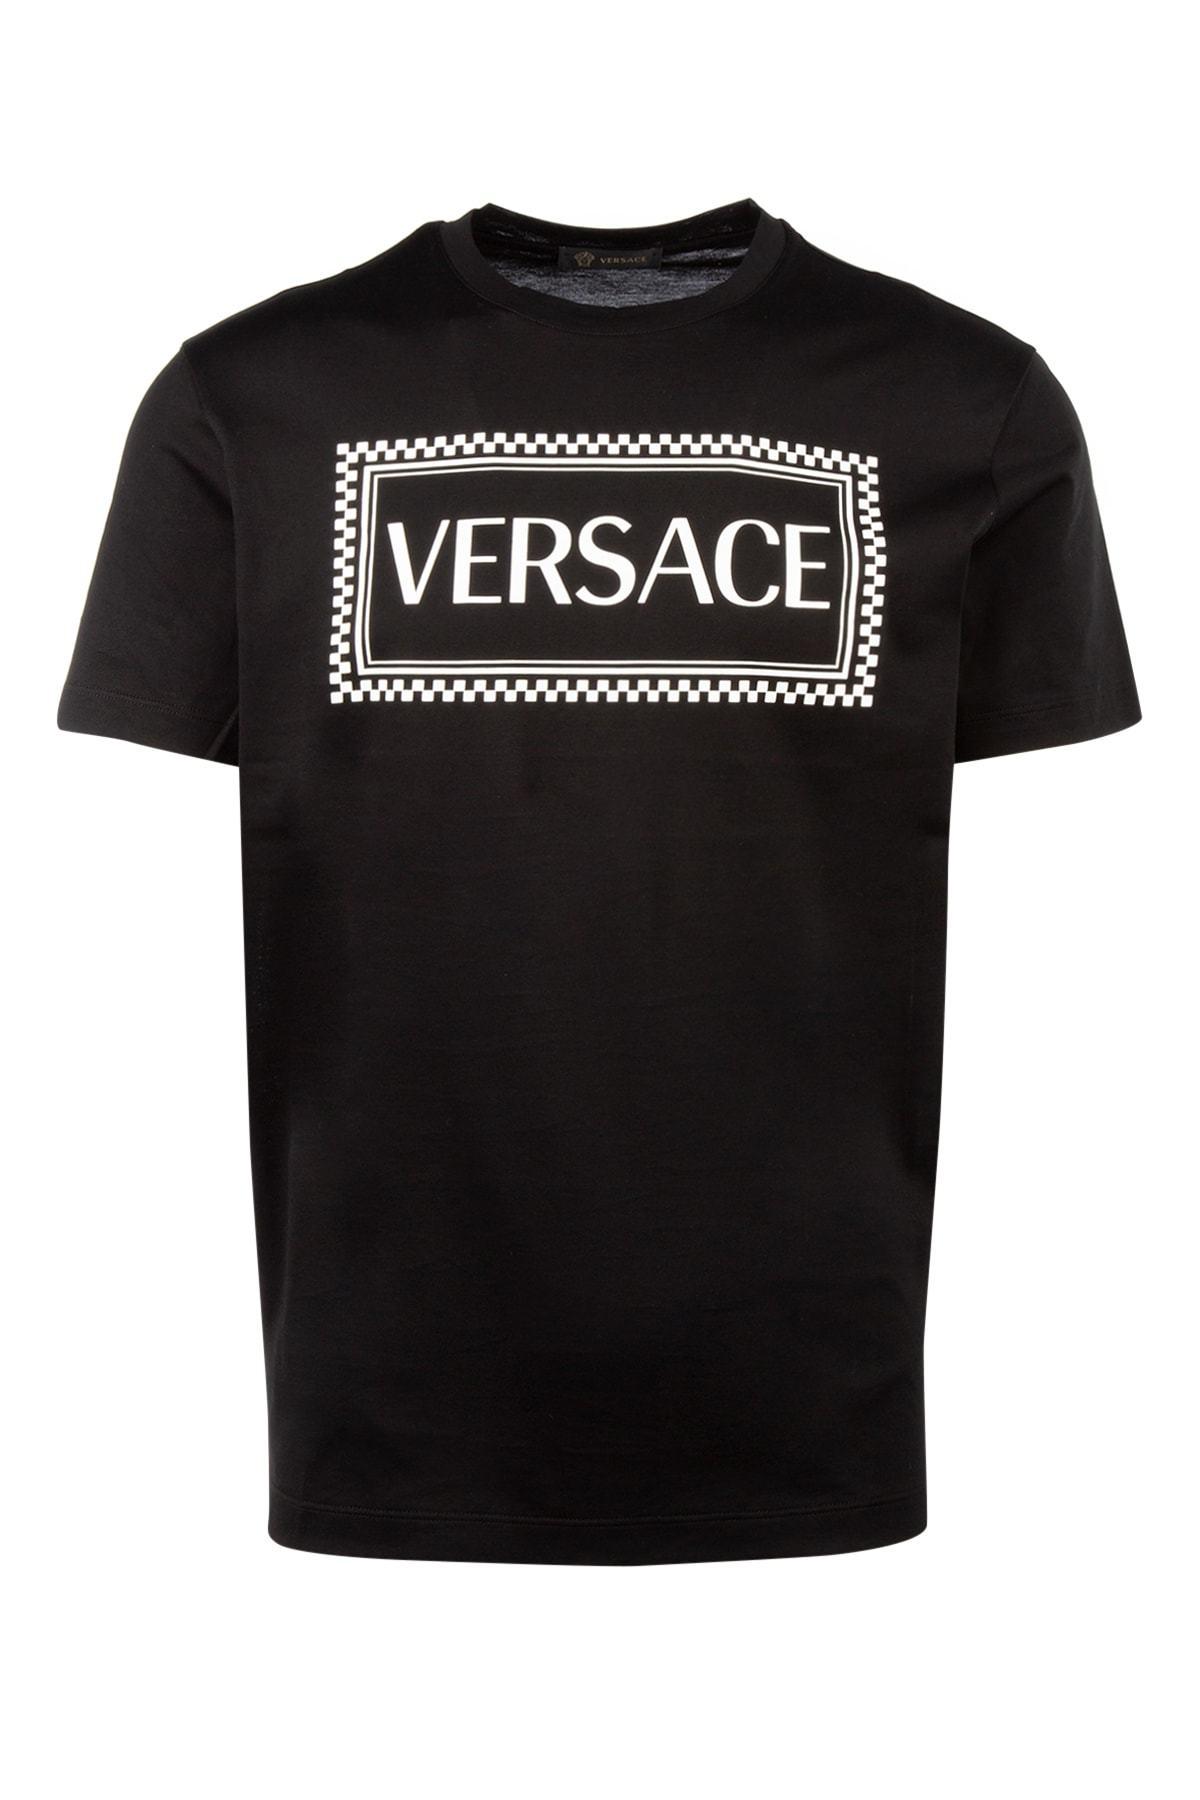 Versace Cotton 90s Vintage Logo T-shirt in Black for Men | Lyst